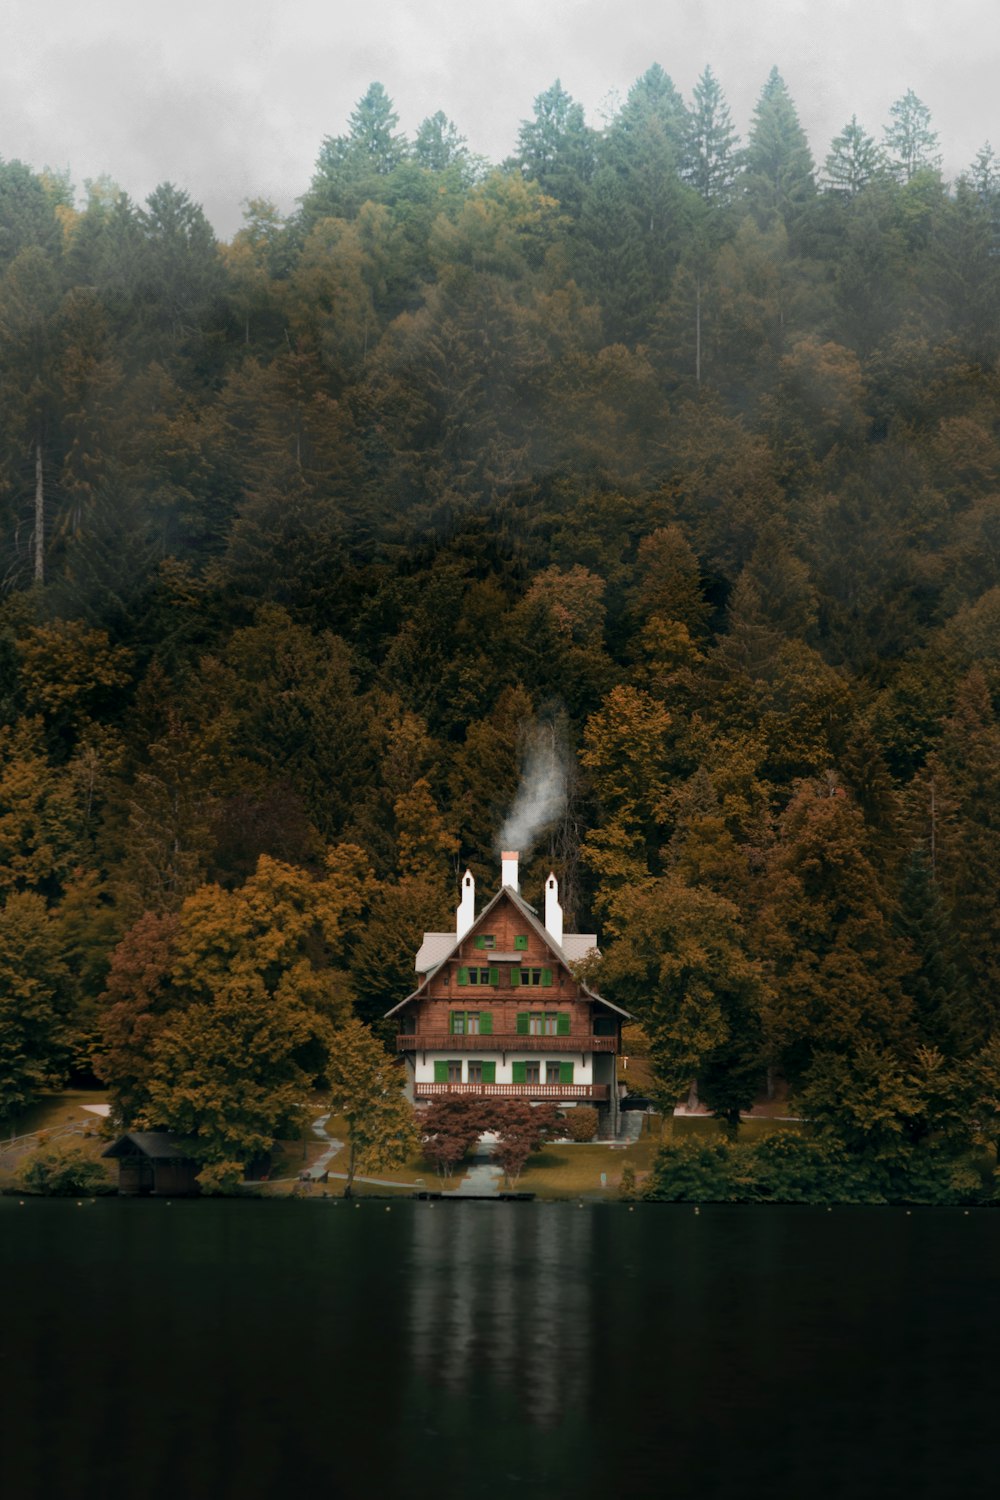 Una casa a orillas de un lago rodeada de árboles